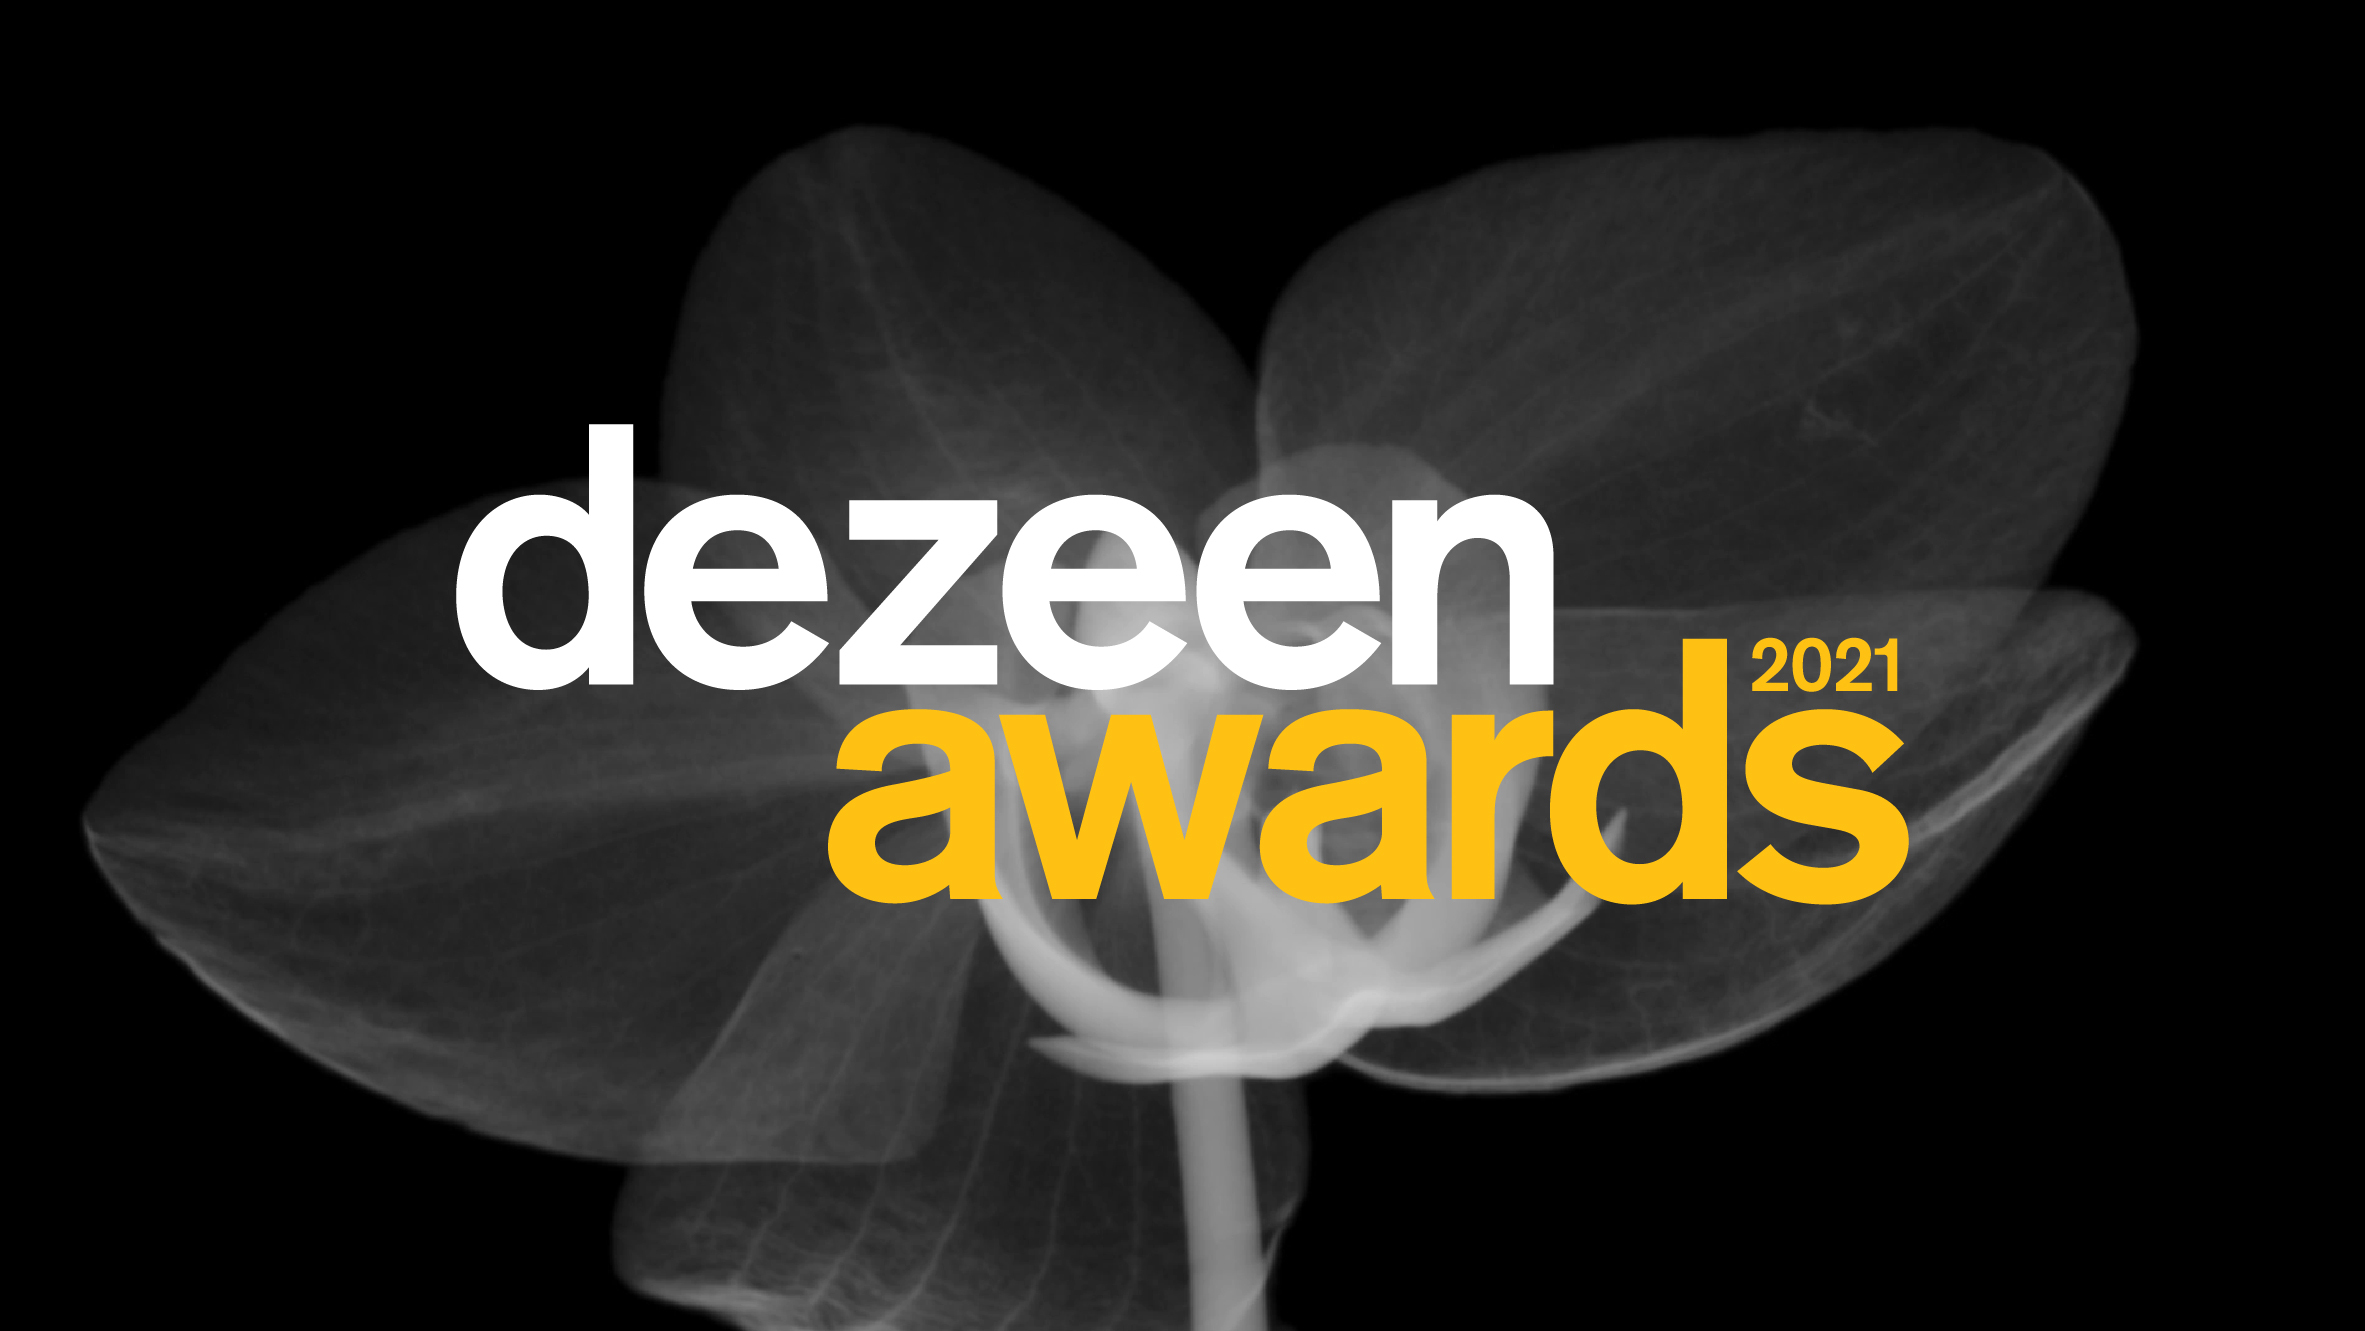 Arthur Huang and Seetal Solanki are Dezeen Awards 2021 judges